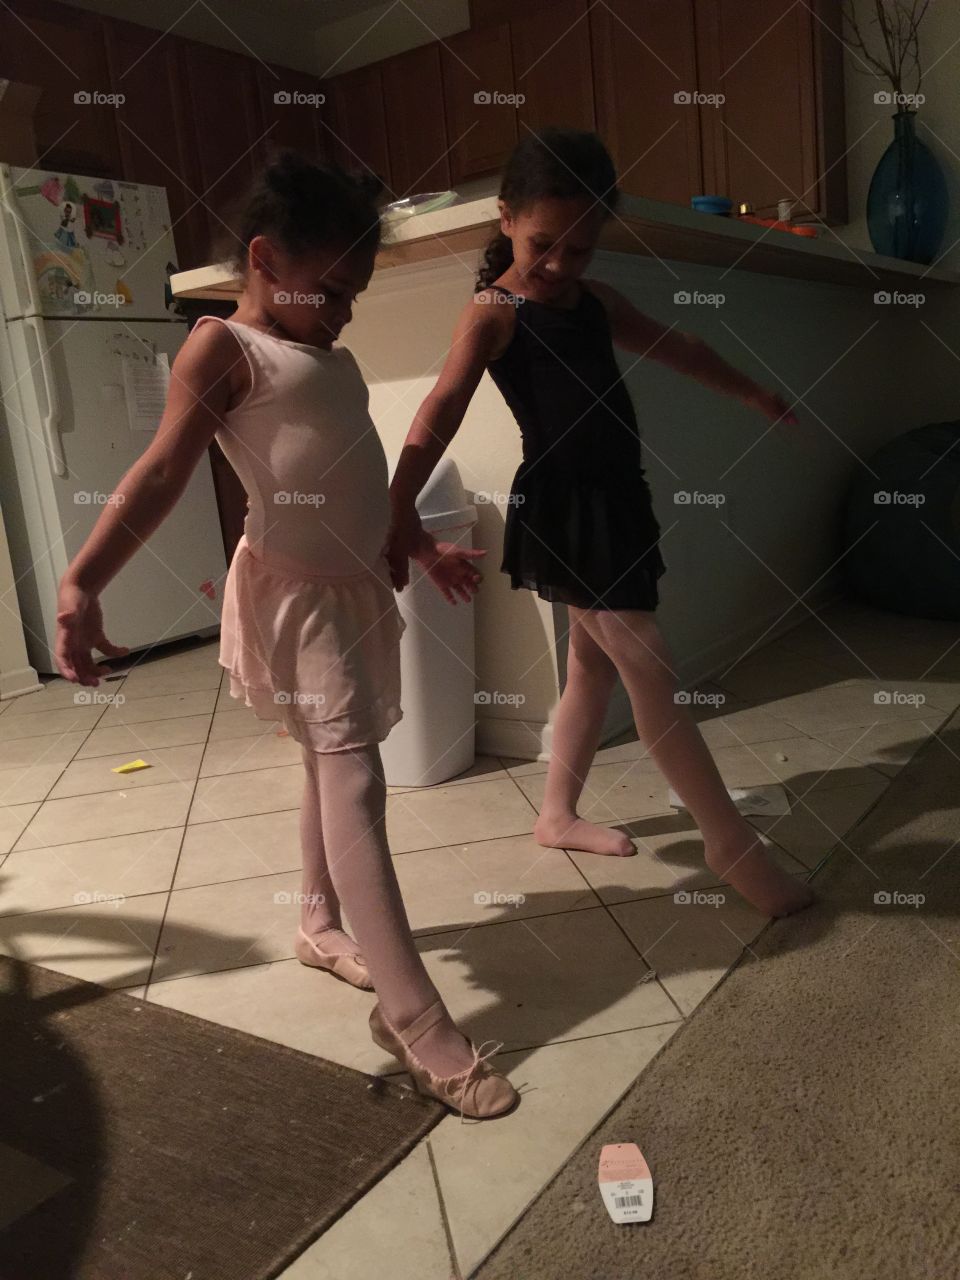 Ballet sisters. Big sister teaching her little sister what she learned in ballet.